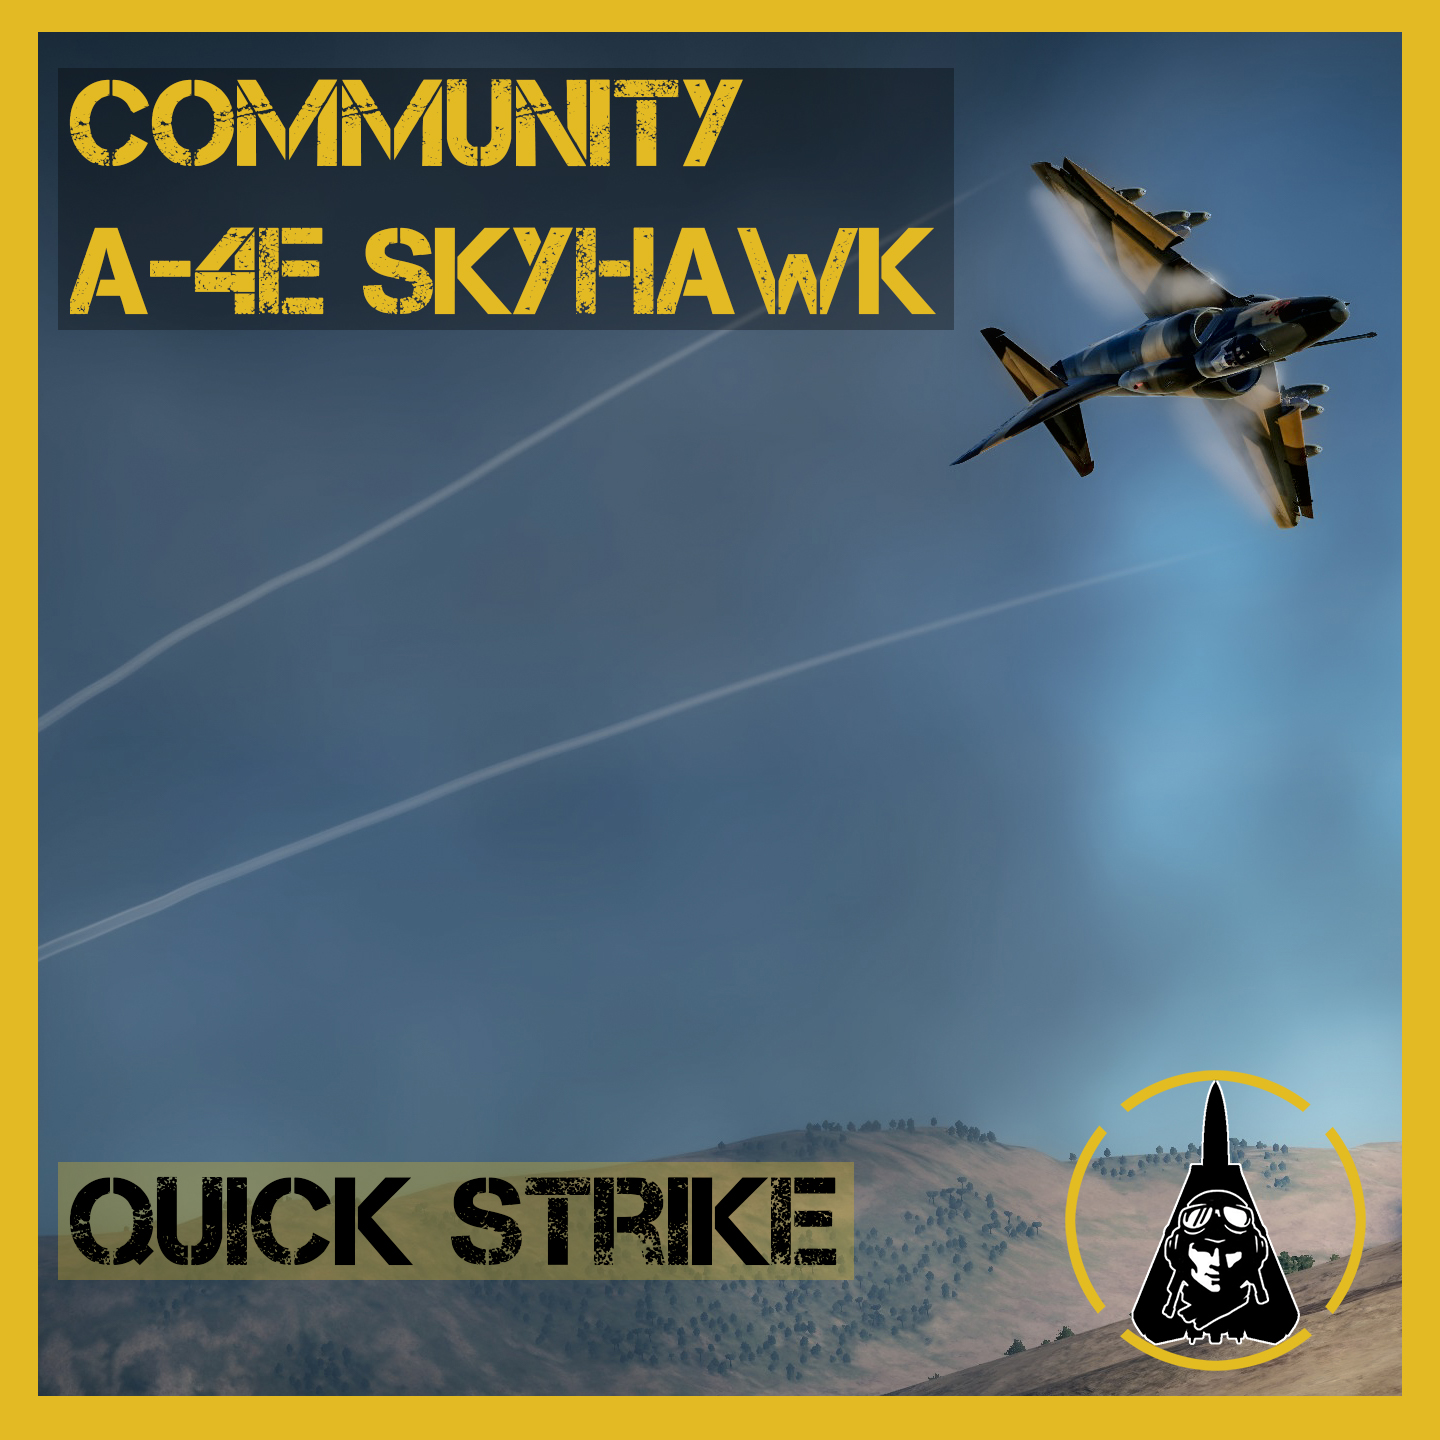 Community A-4E Mod Quick Strike Mission by Sport